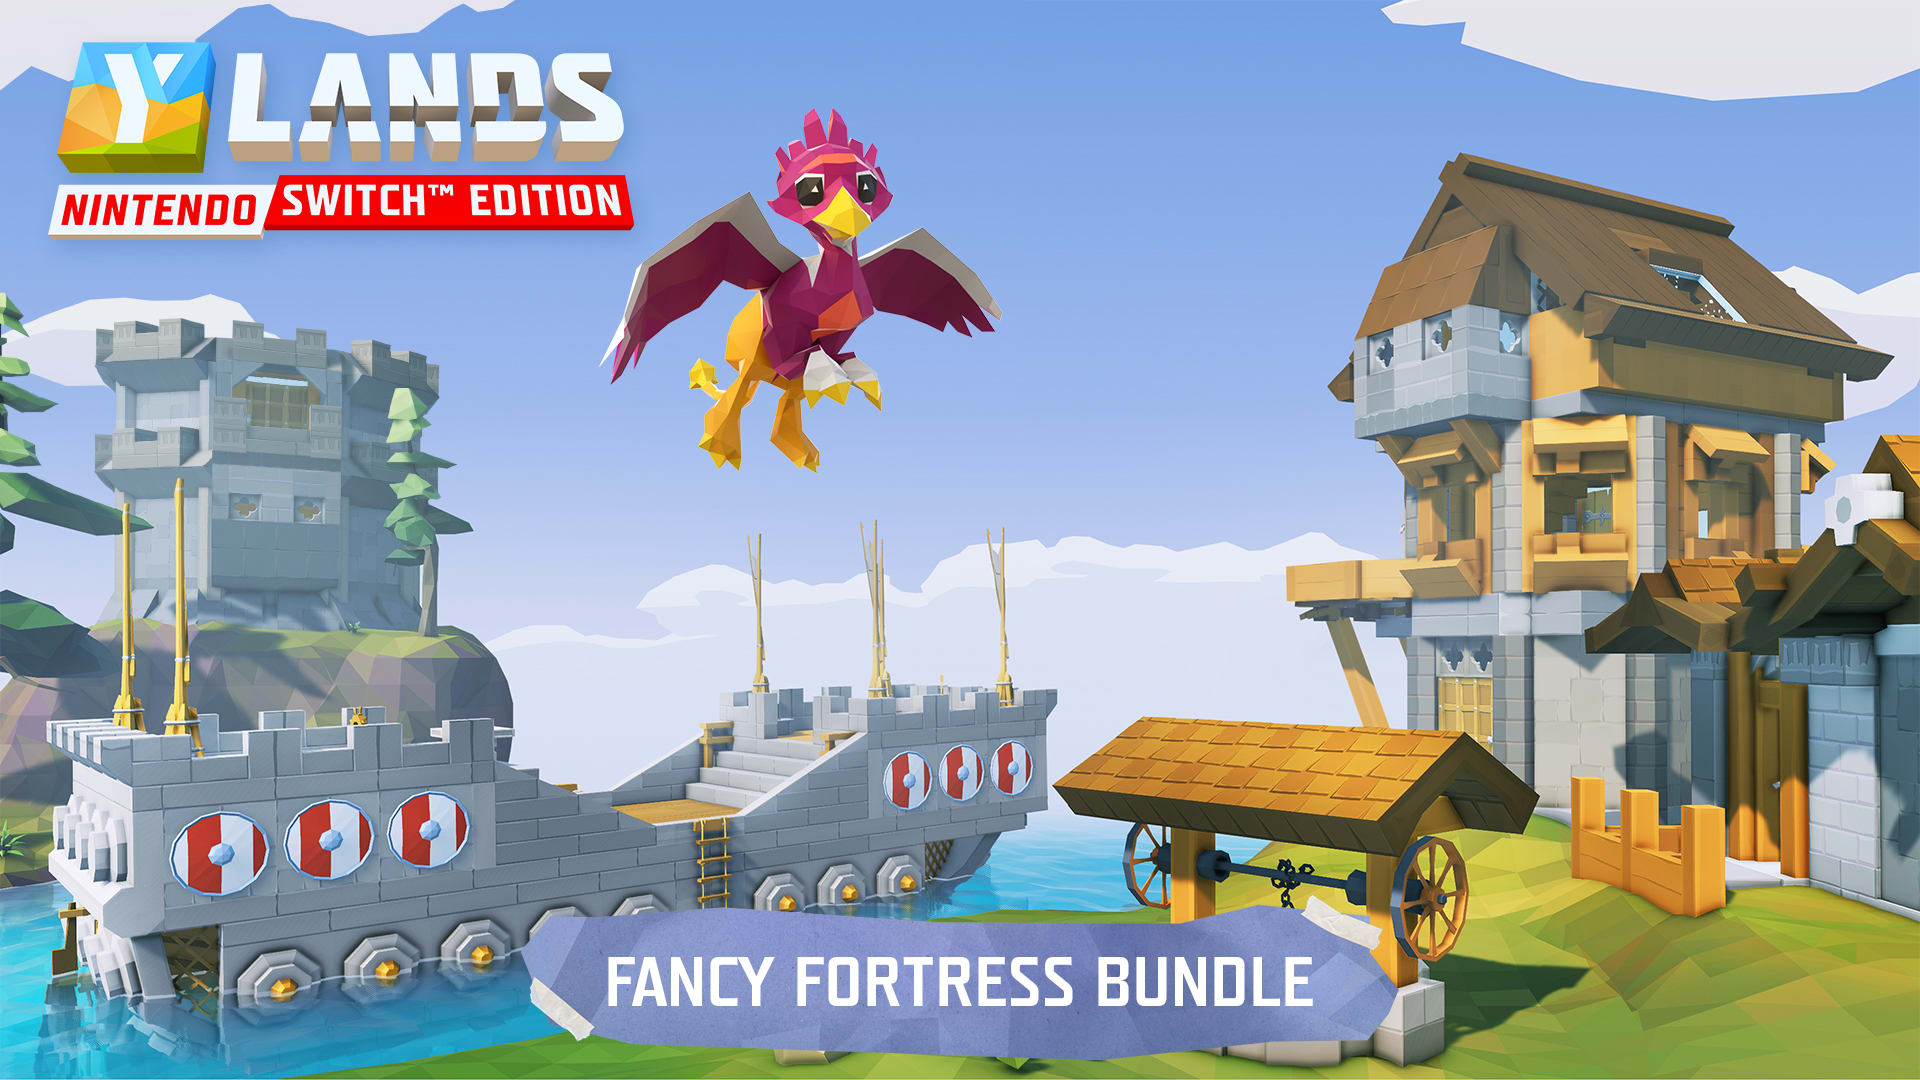 Ylands Nintendo Switch™ Edition - Fancy Fortress Bundle